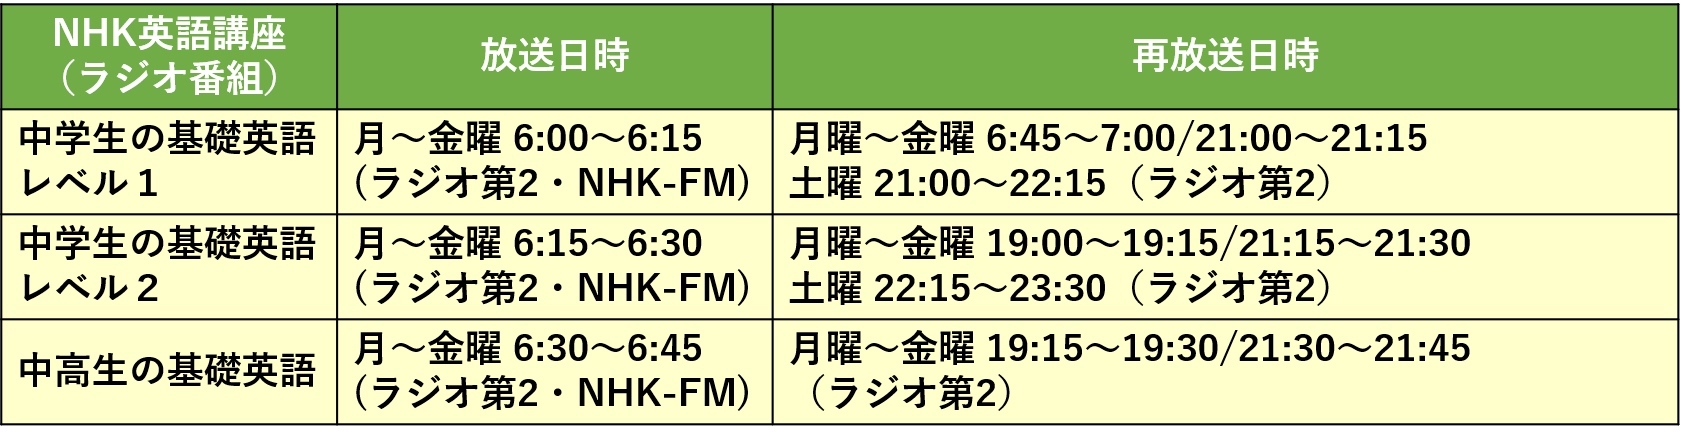 junior-high-school-NHK-radio